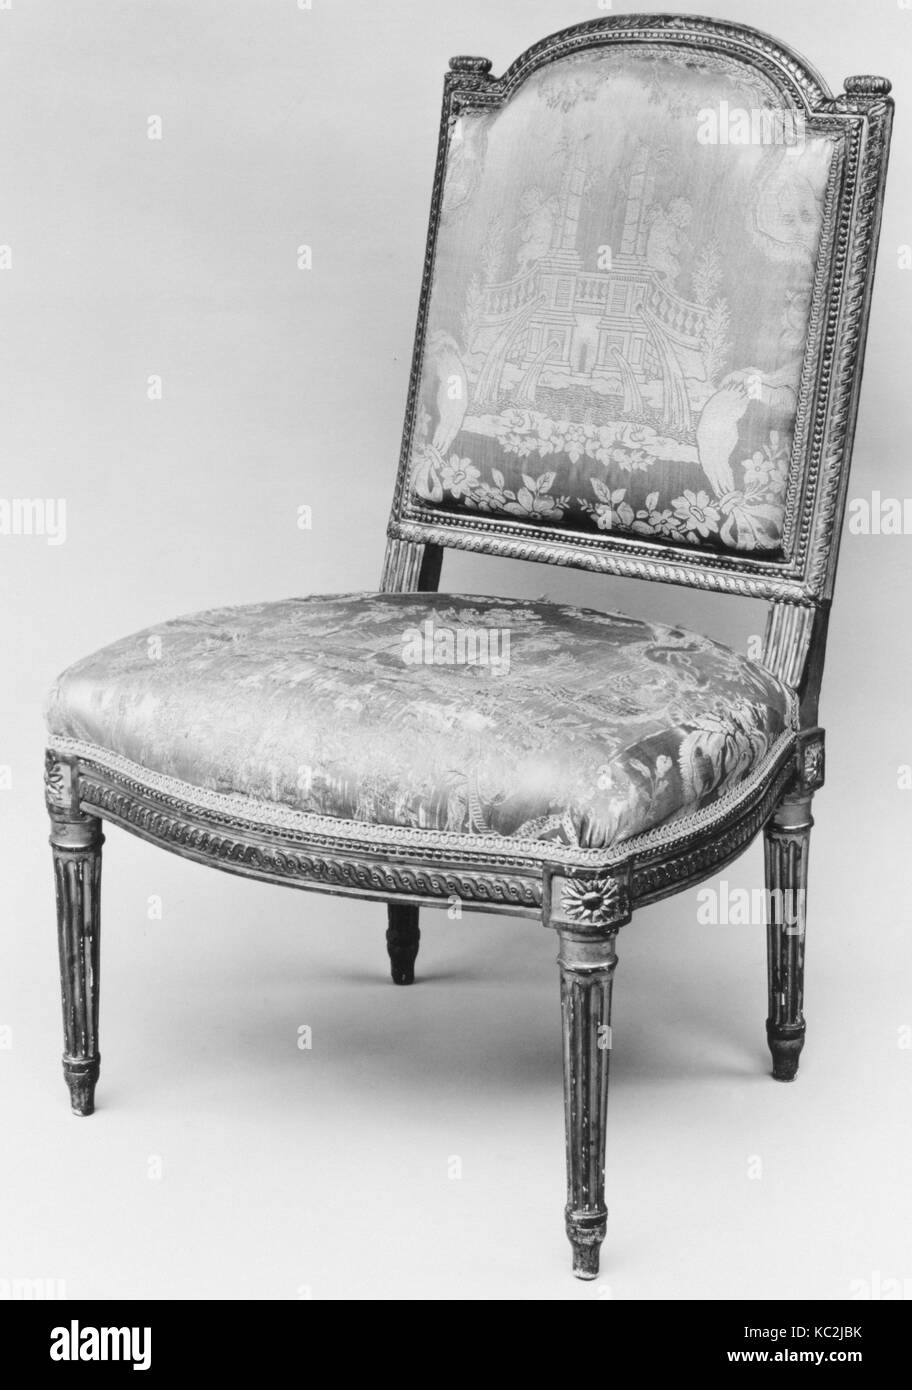 Chaise à la reine hi-res stock photography and images - Alamy